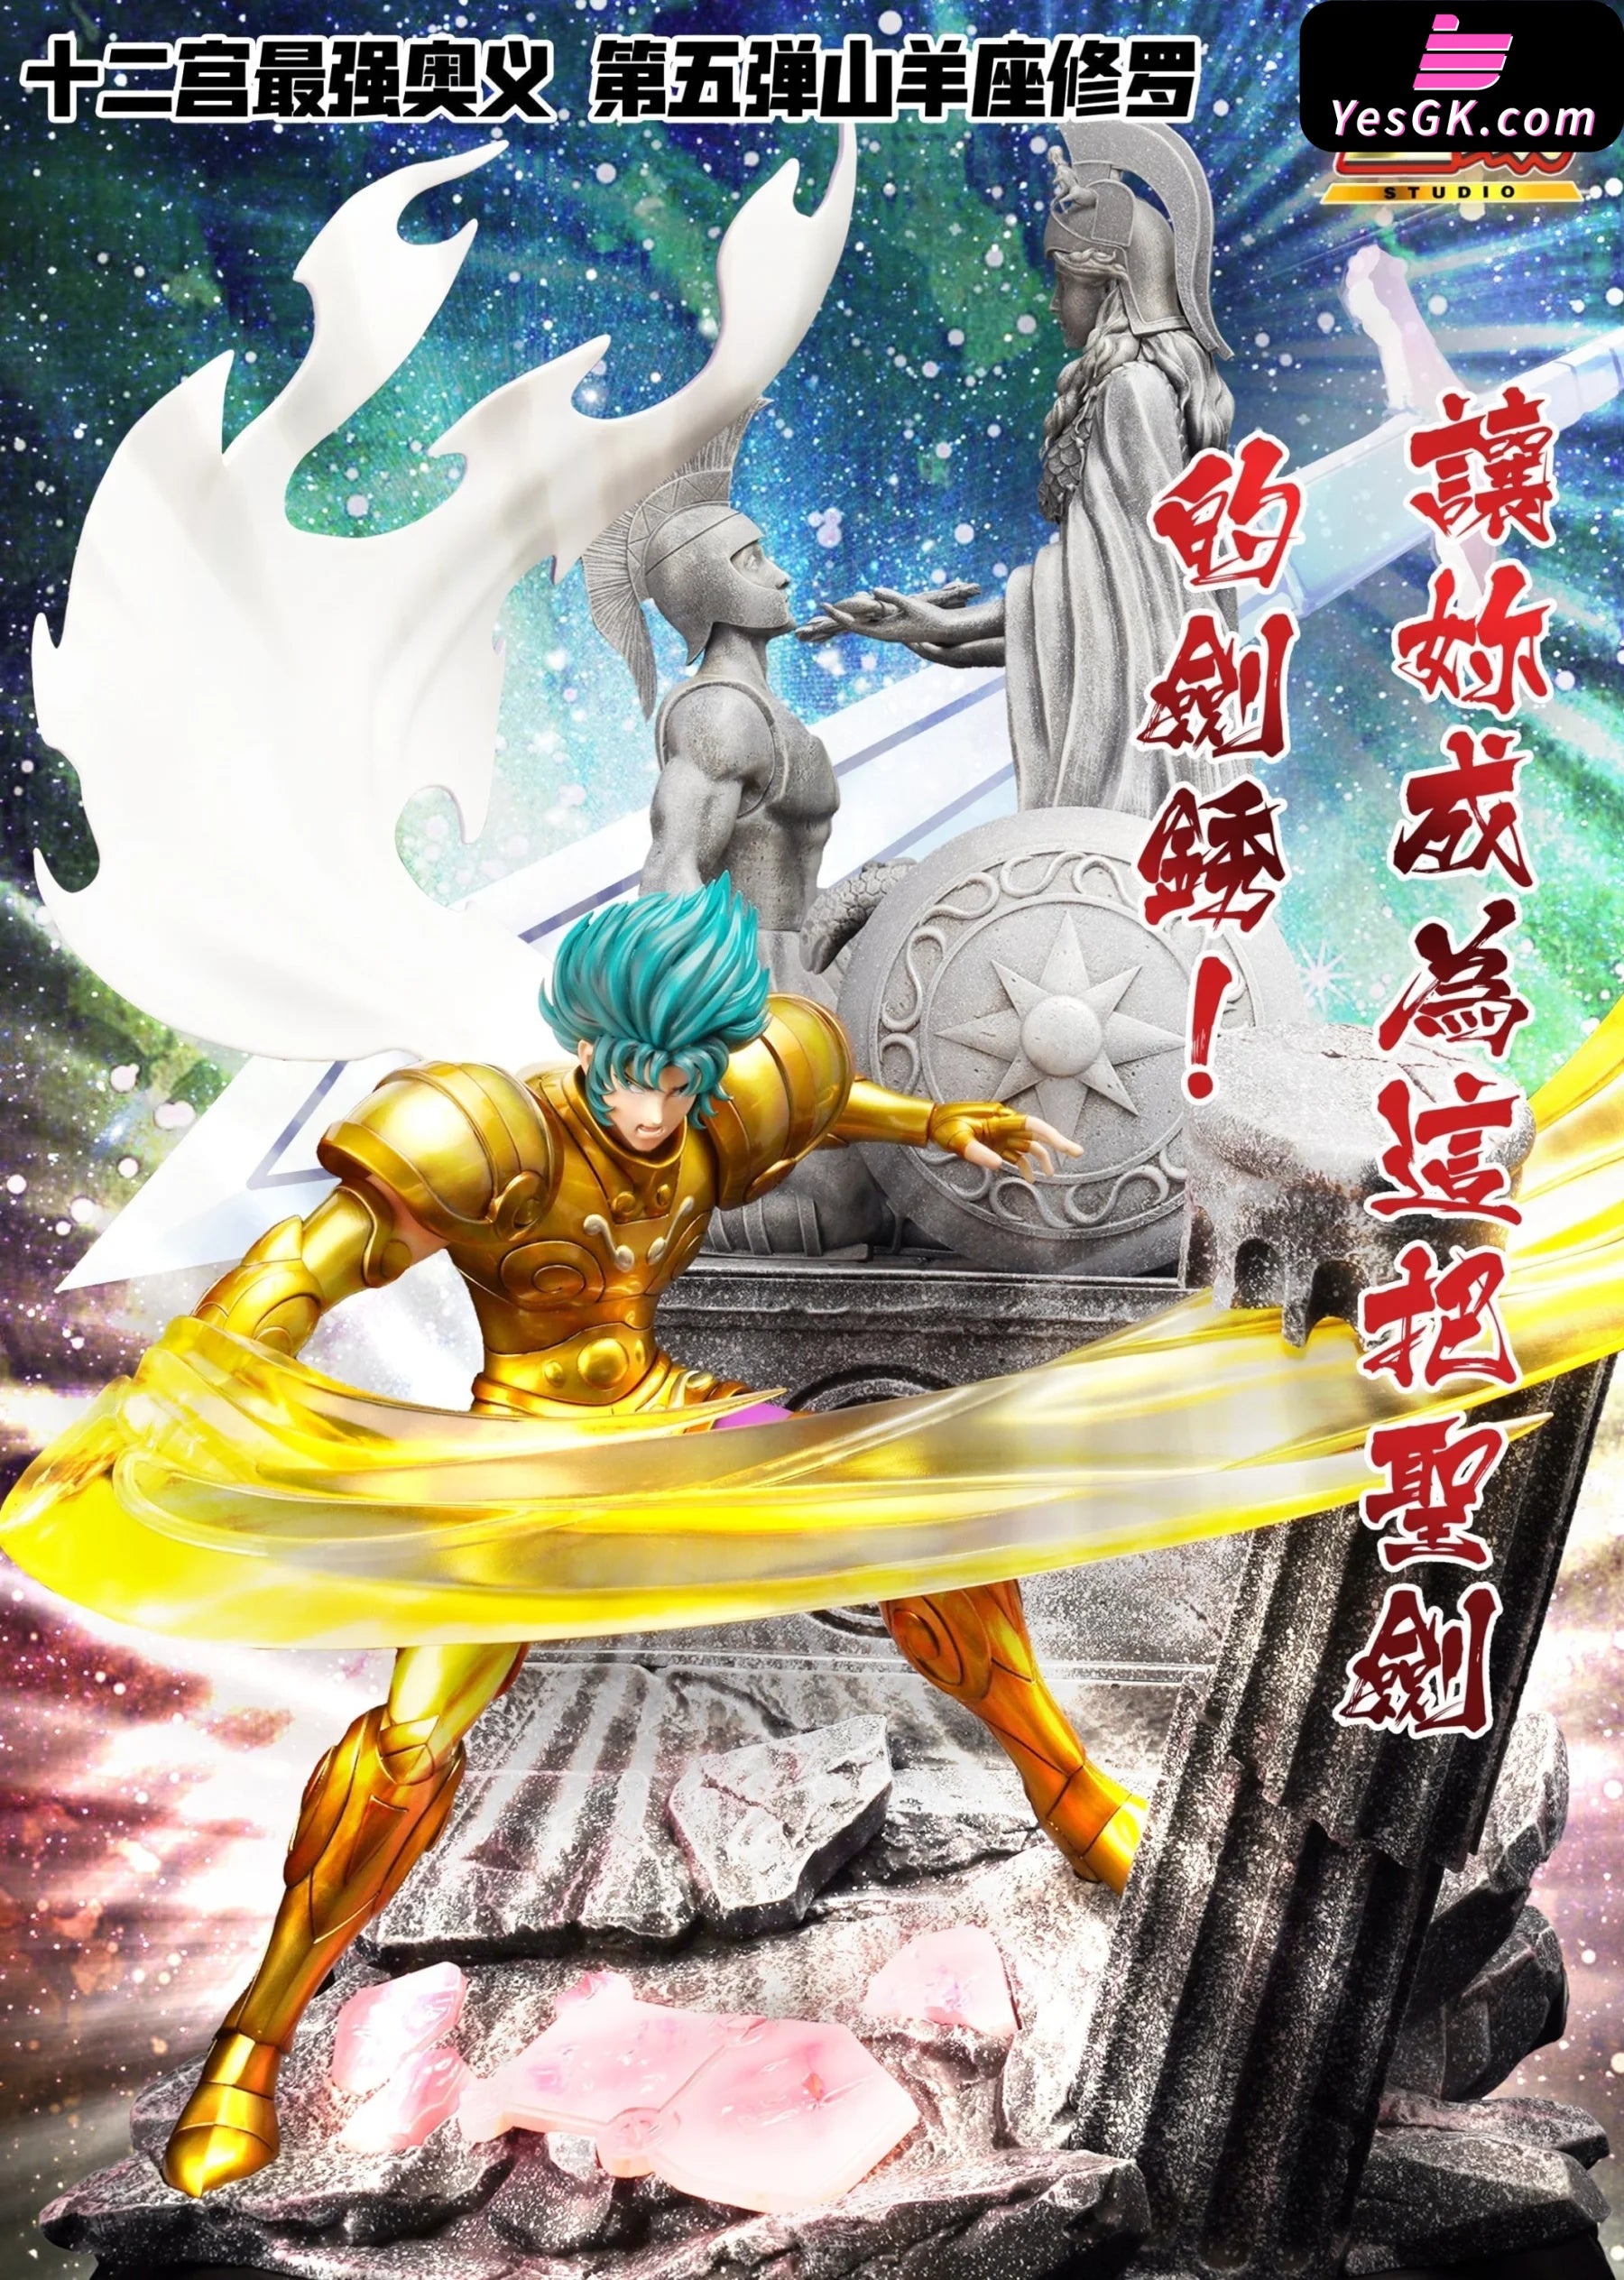 Super Anime Heroes Saint Seiya Vol. 2 - Gold Twelve Temples Chapter:  Capricorn Shura - My Anime Shelf